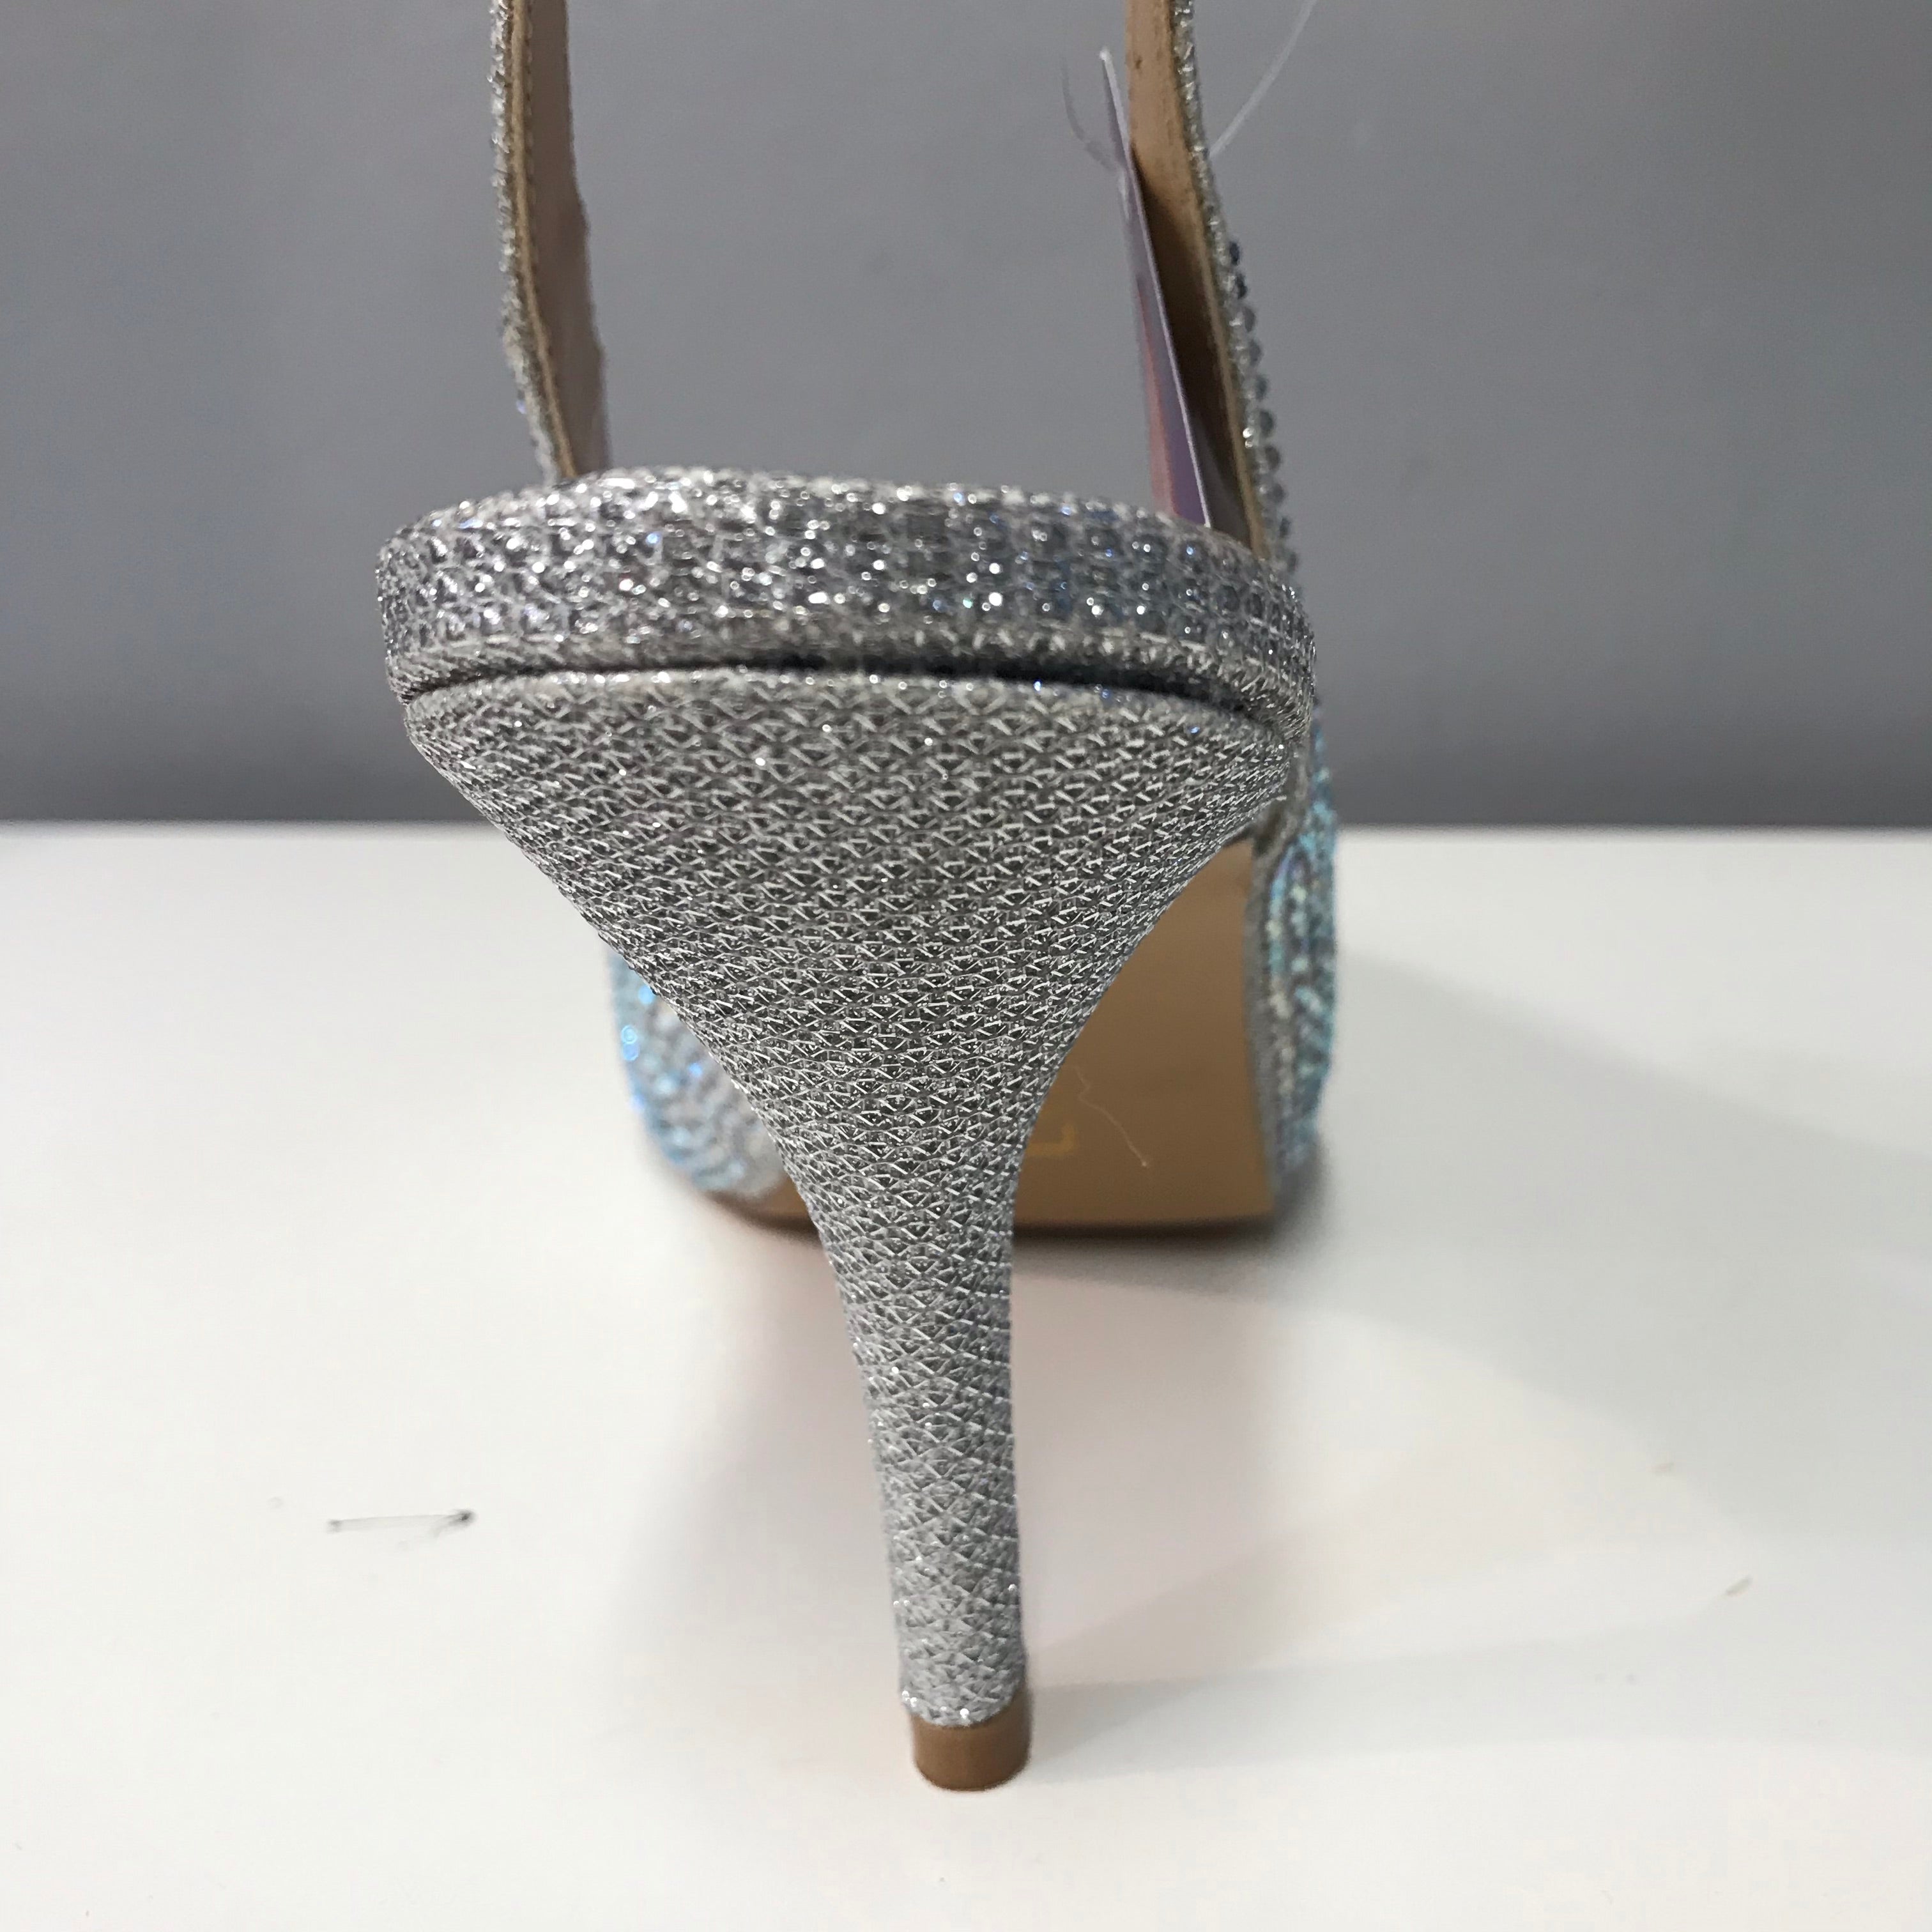 Lotus Astro Diamanté encrusted slingbacks  Silver Dress shoe